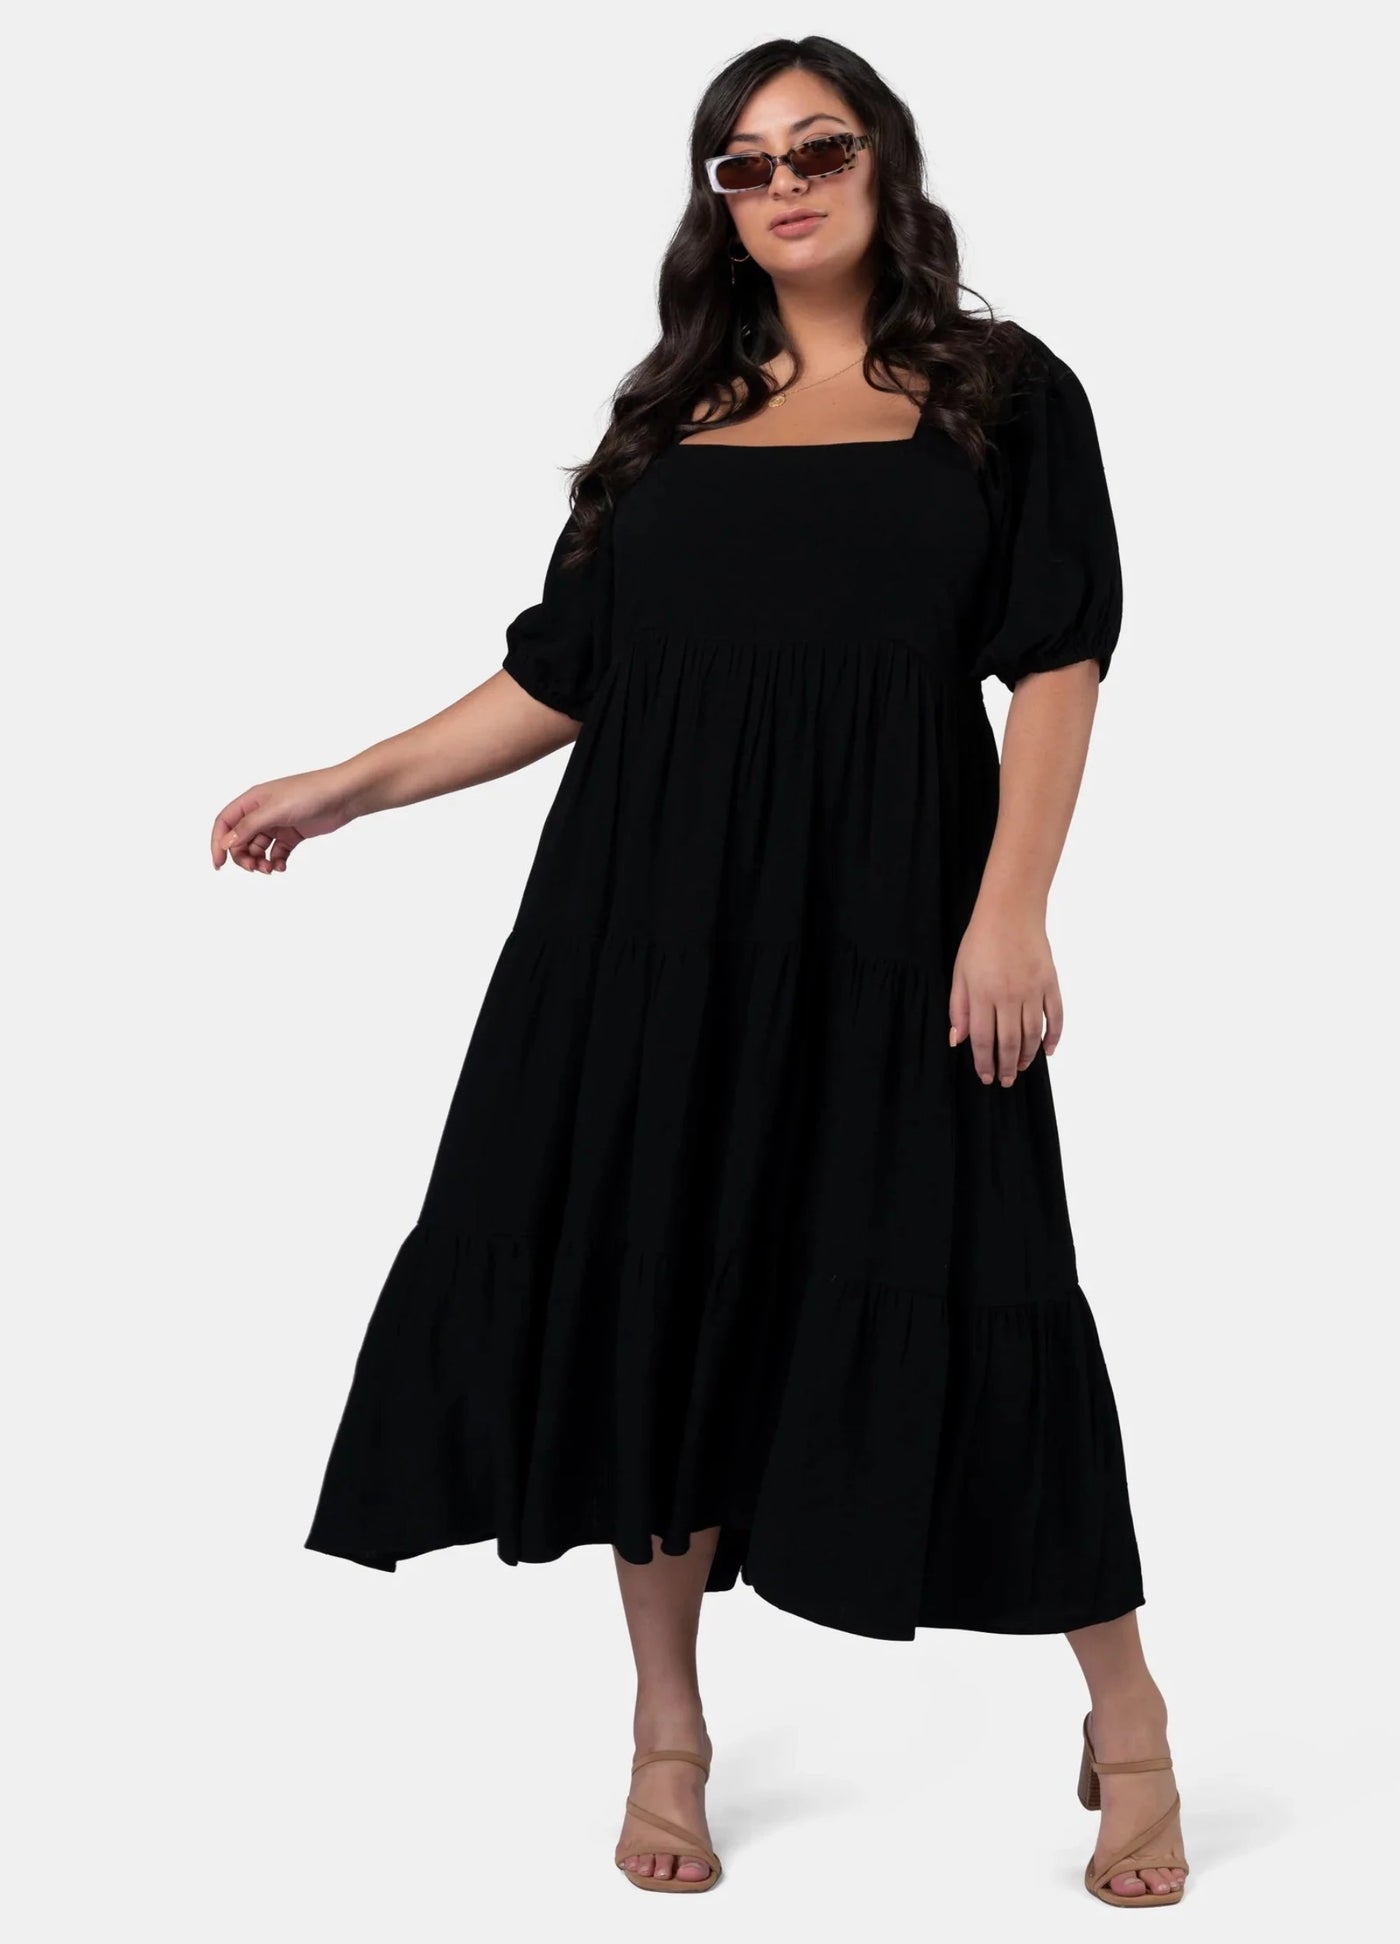 Black Isadora dress